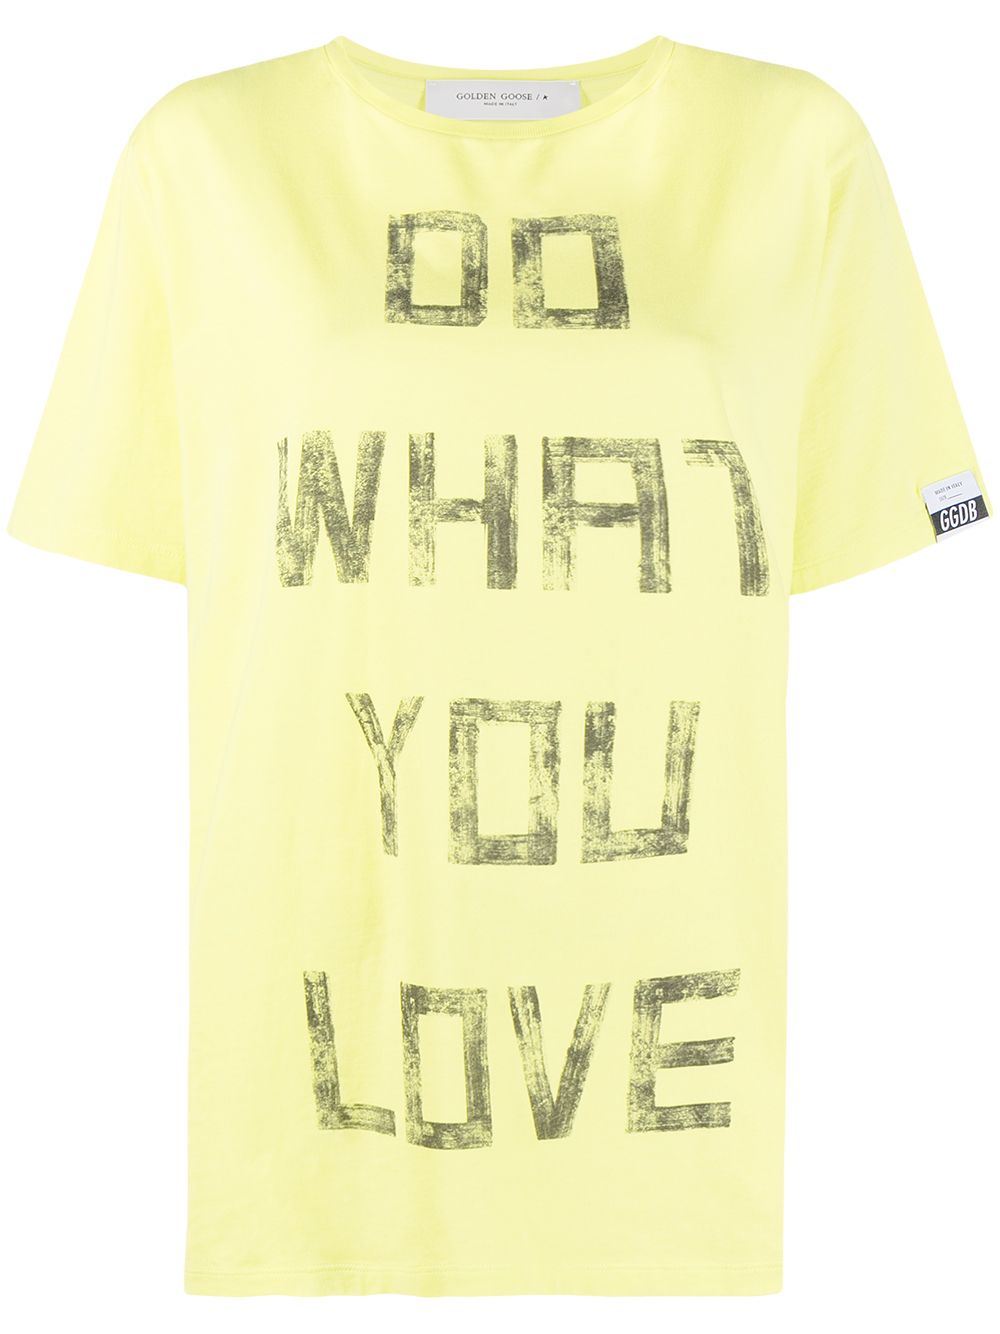 Do What You Love print T-shirt